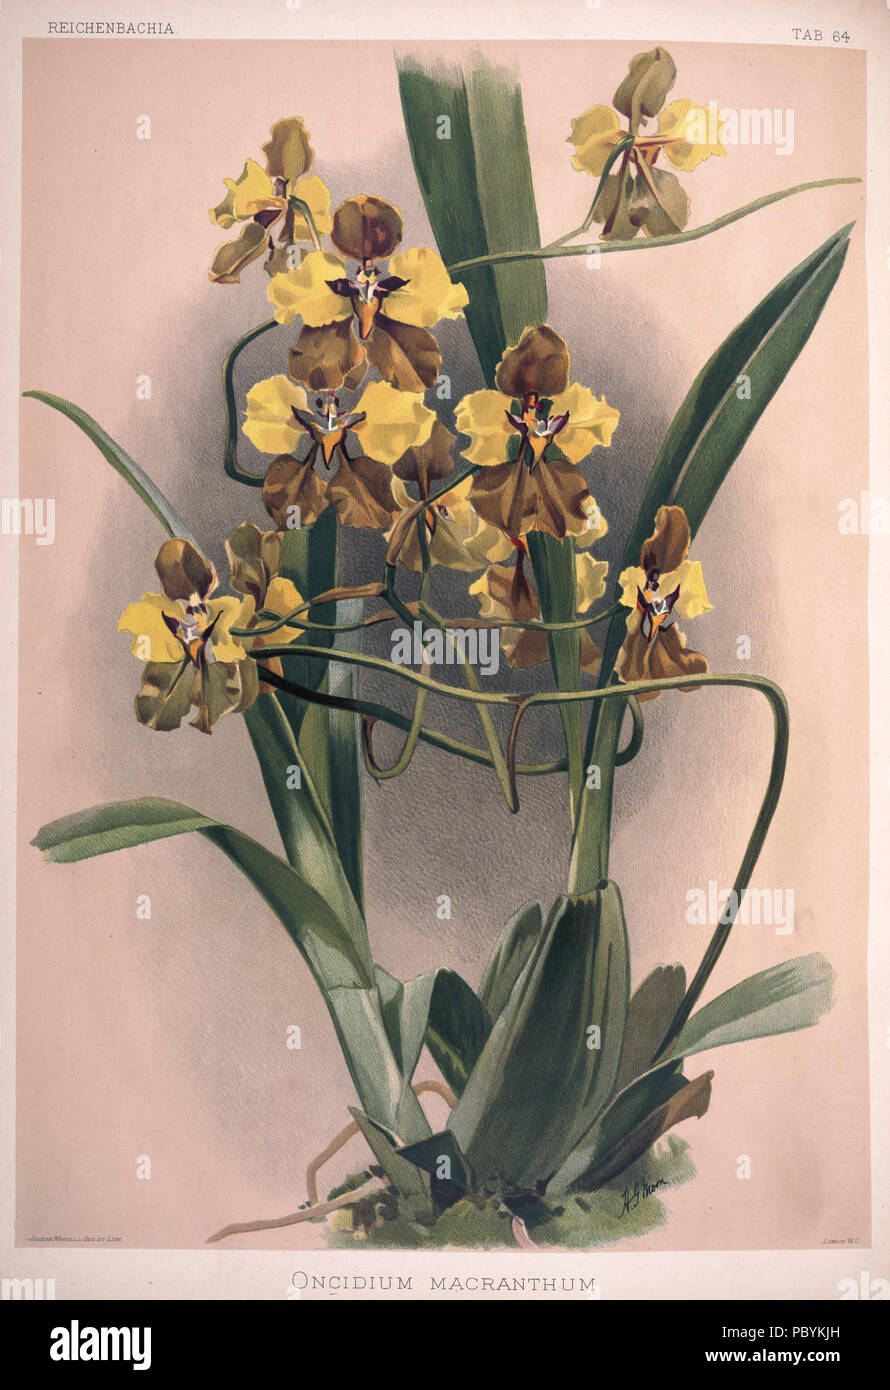 220 Frederick Sander - Reichenbachia II plate 64 (1890) - Oncidium macranthum Stock Photo